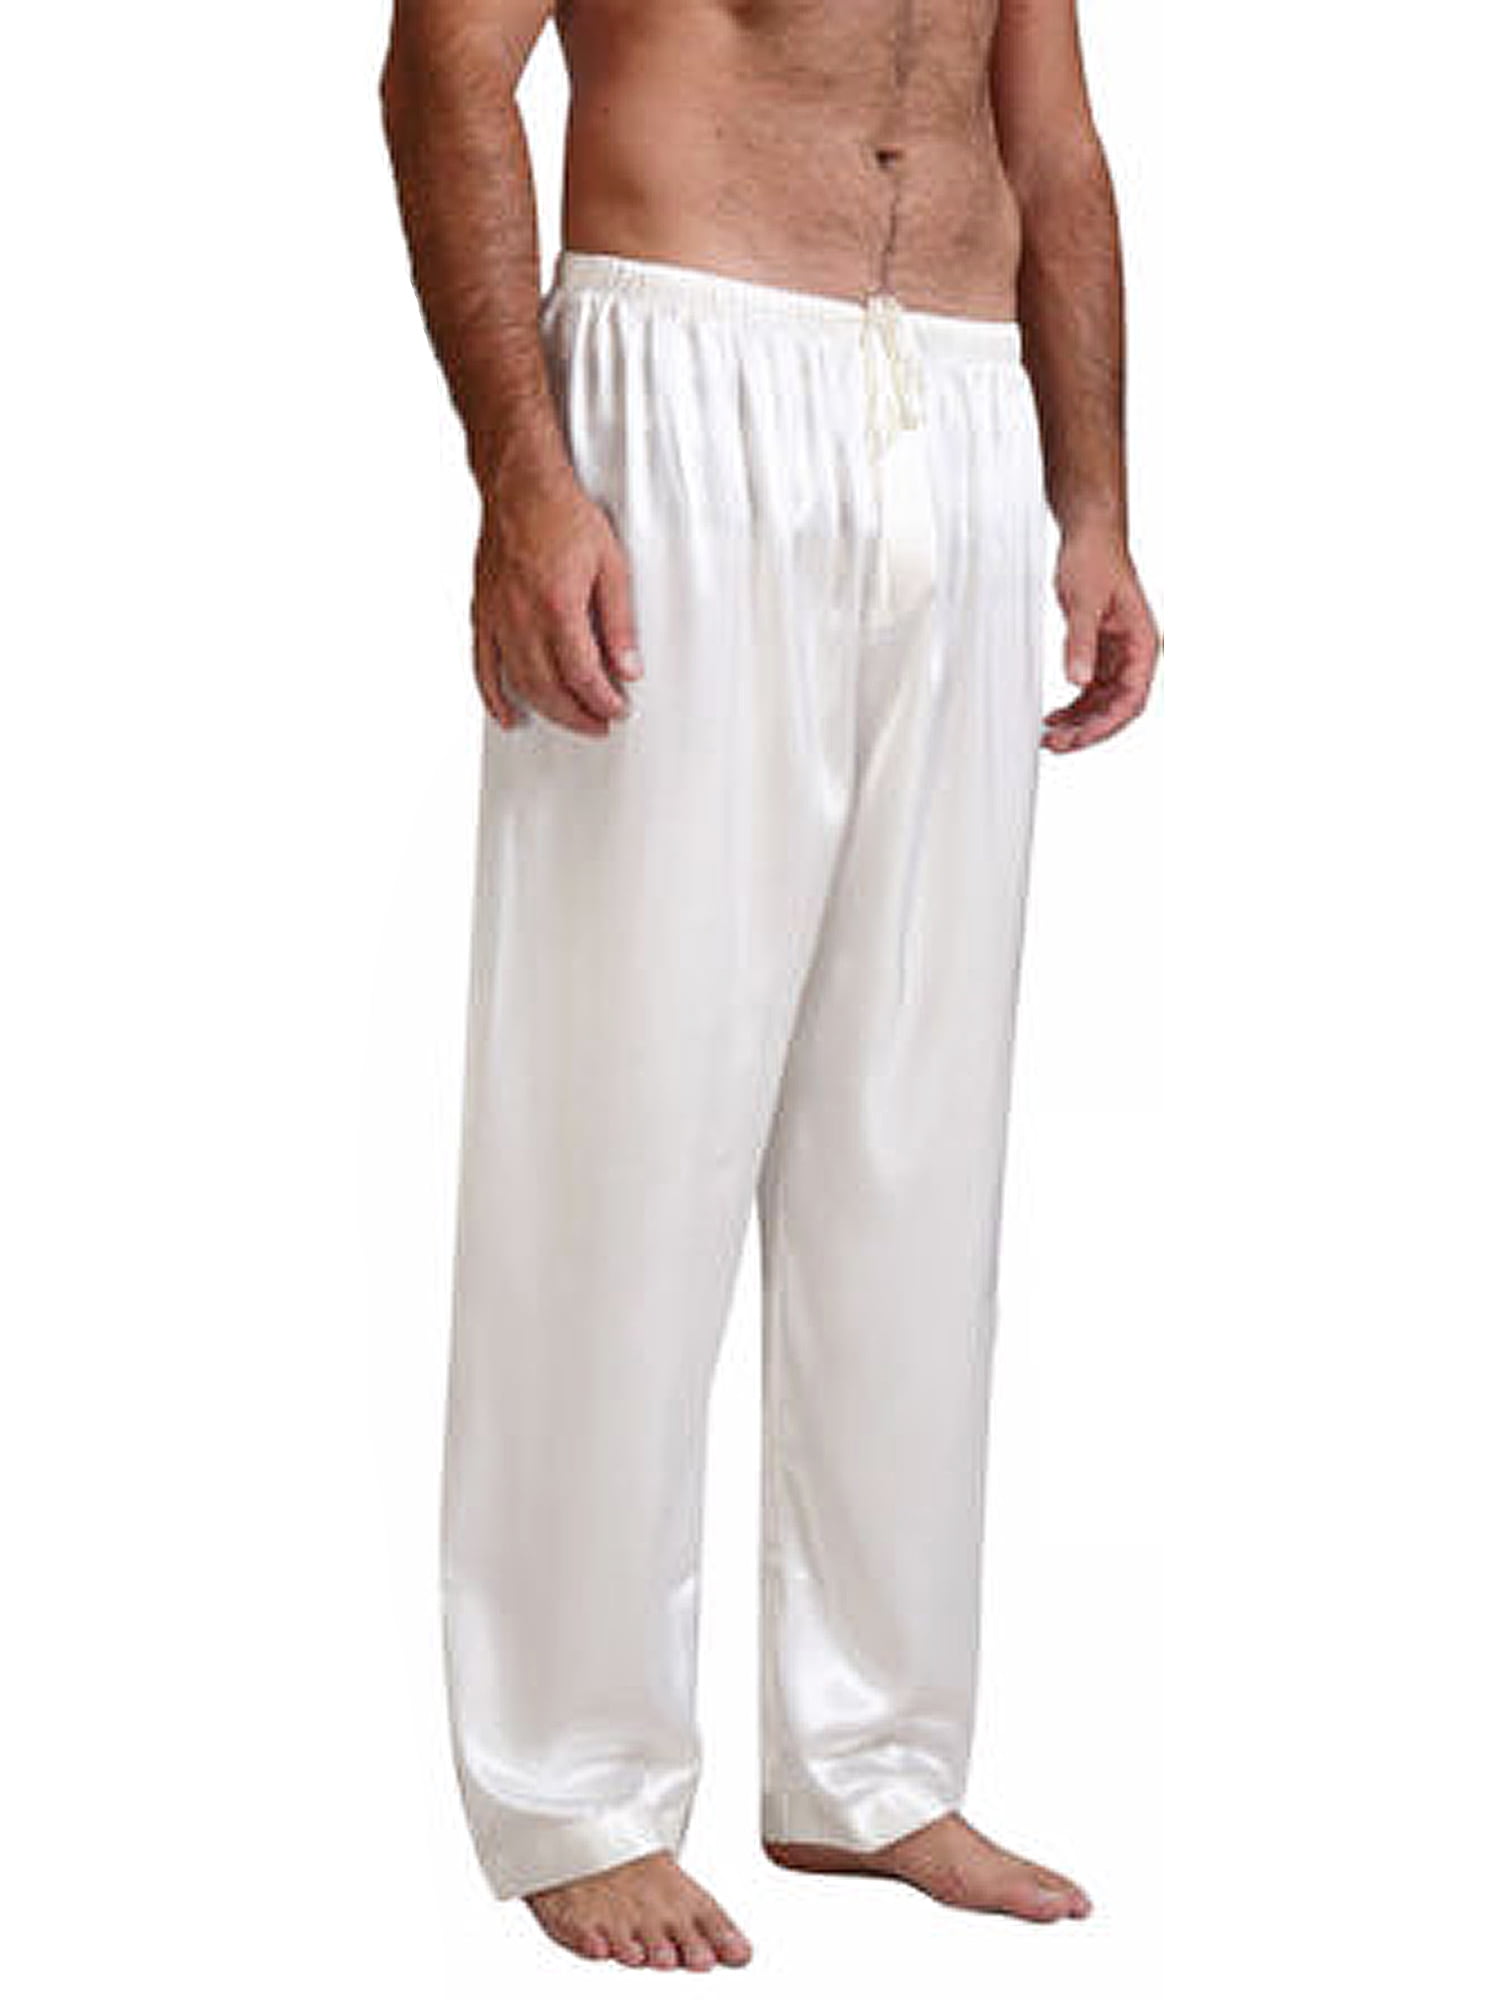 citgeett - Mens Classic Satin Pajamas Sleepwear Pyjamas Pants Sleep ...